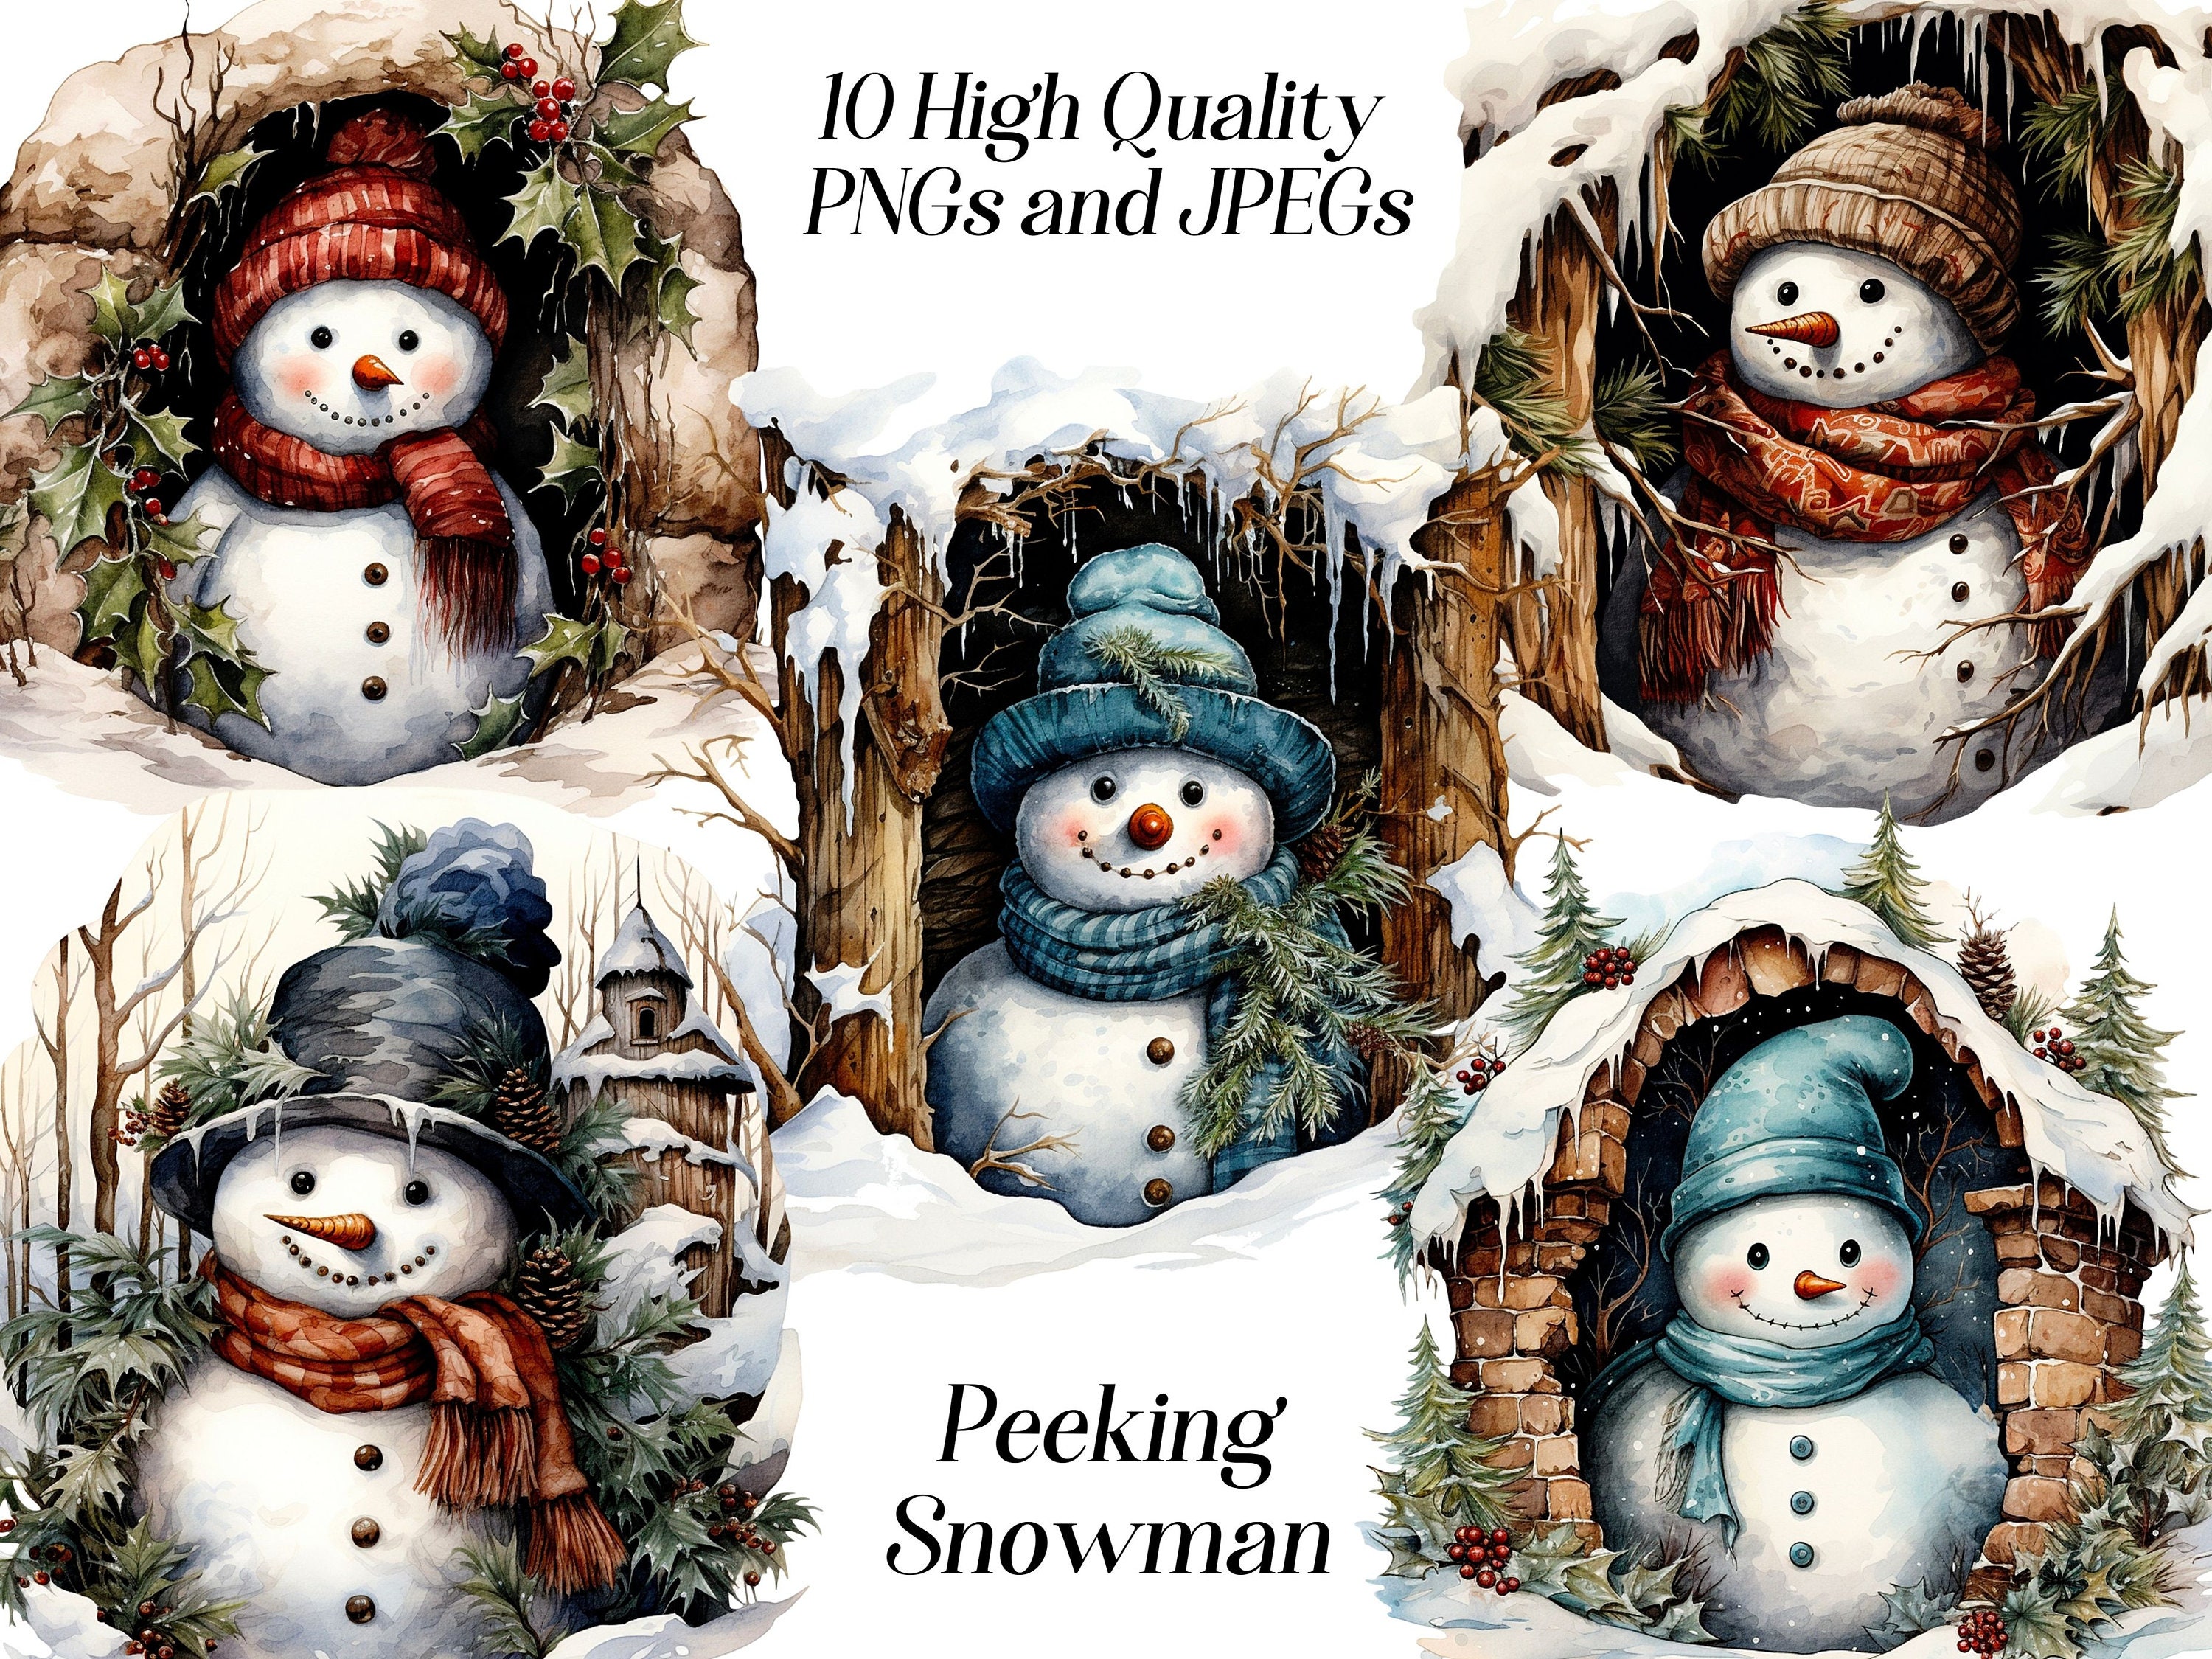 DIY Snowman Kit Snowman Hat, Snowman Arms, Snowman Nose Snowmen Elements 